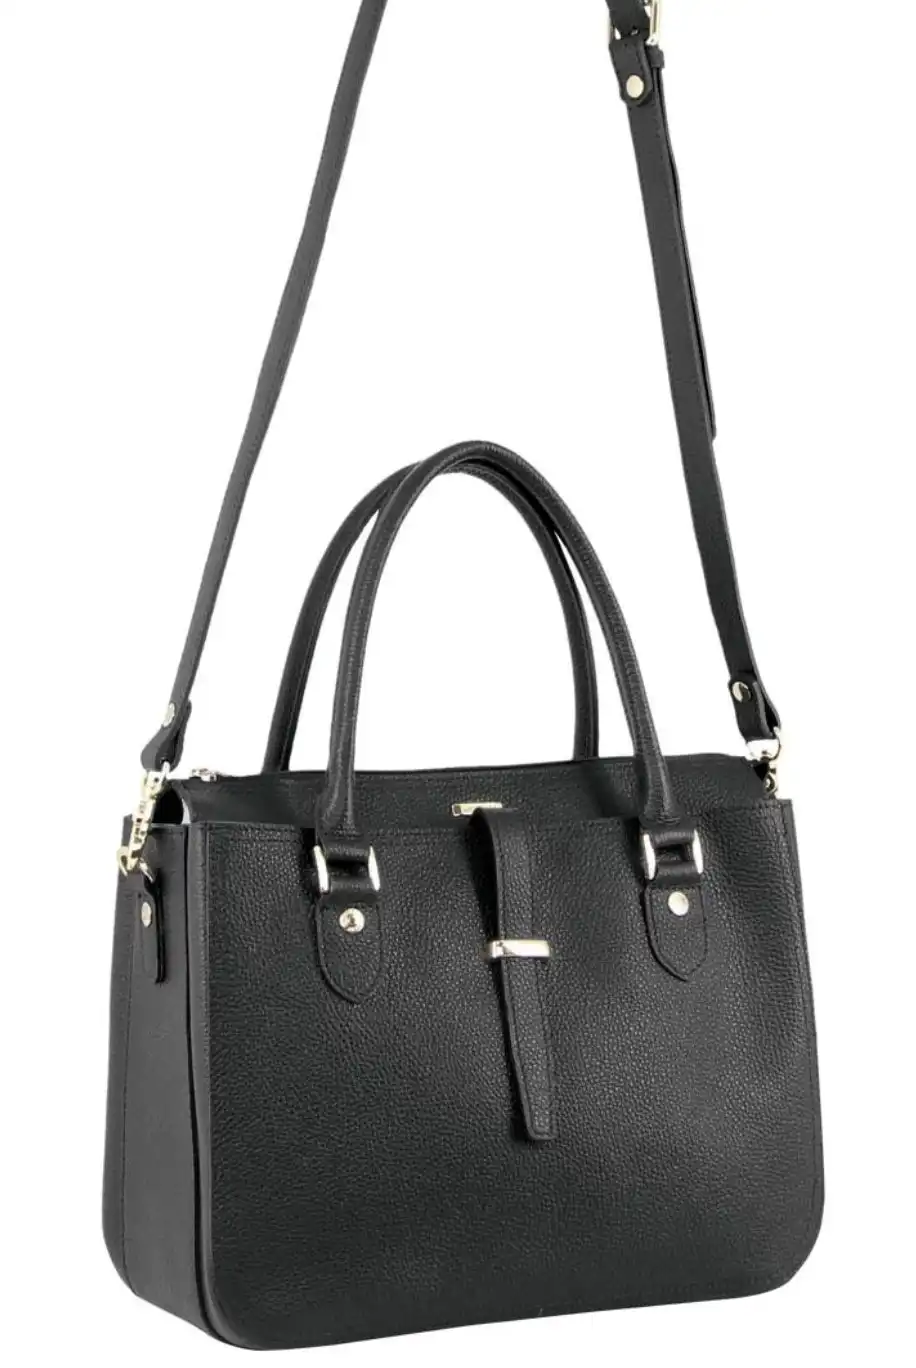 Morrissey Italian Womens Structured Leather Handbag Ladies Bag - Black